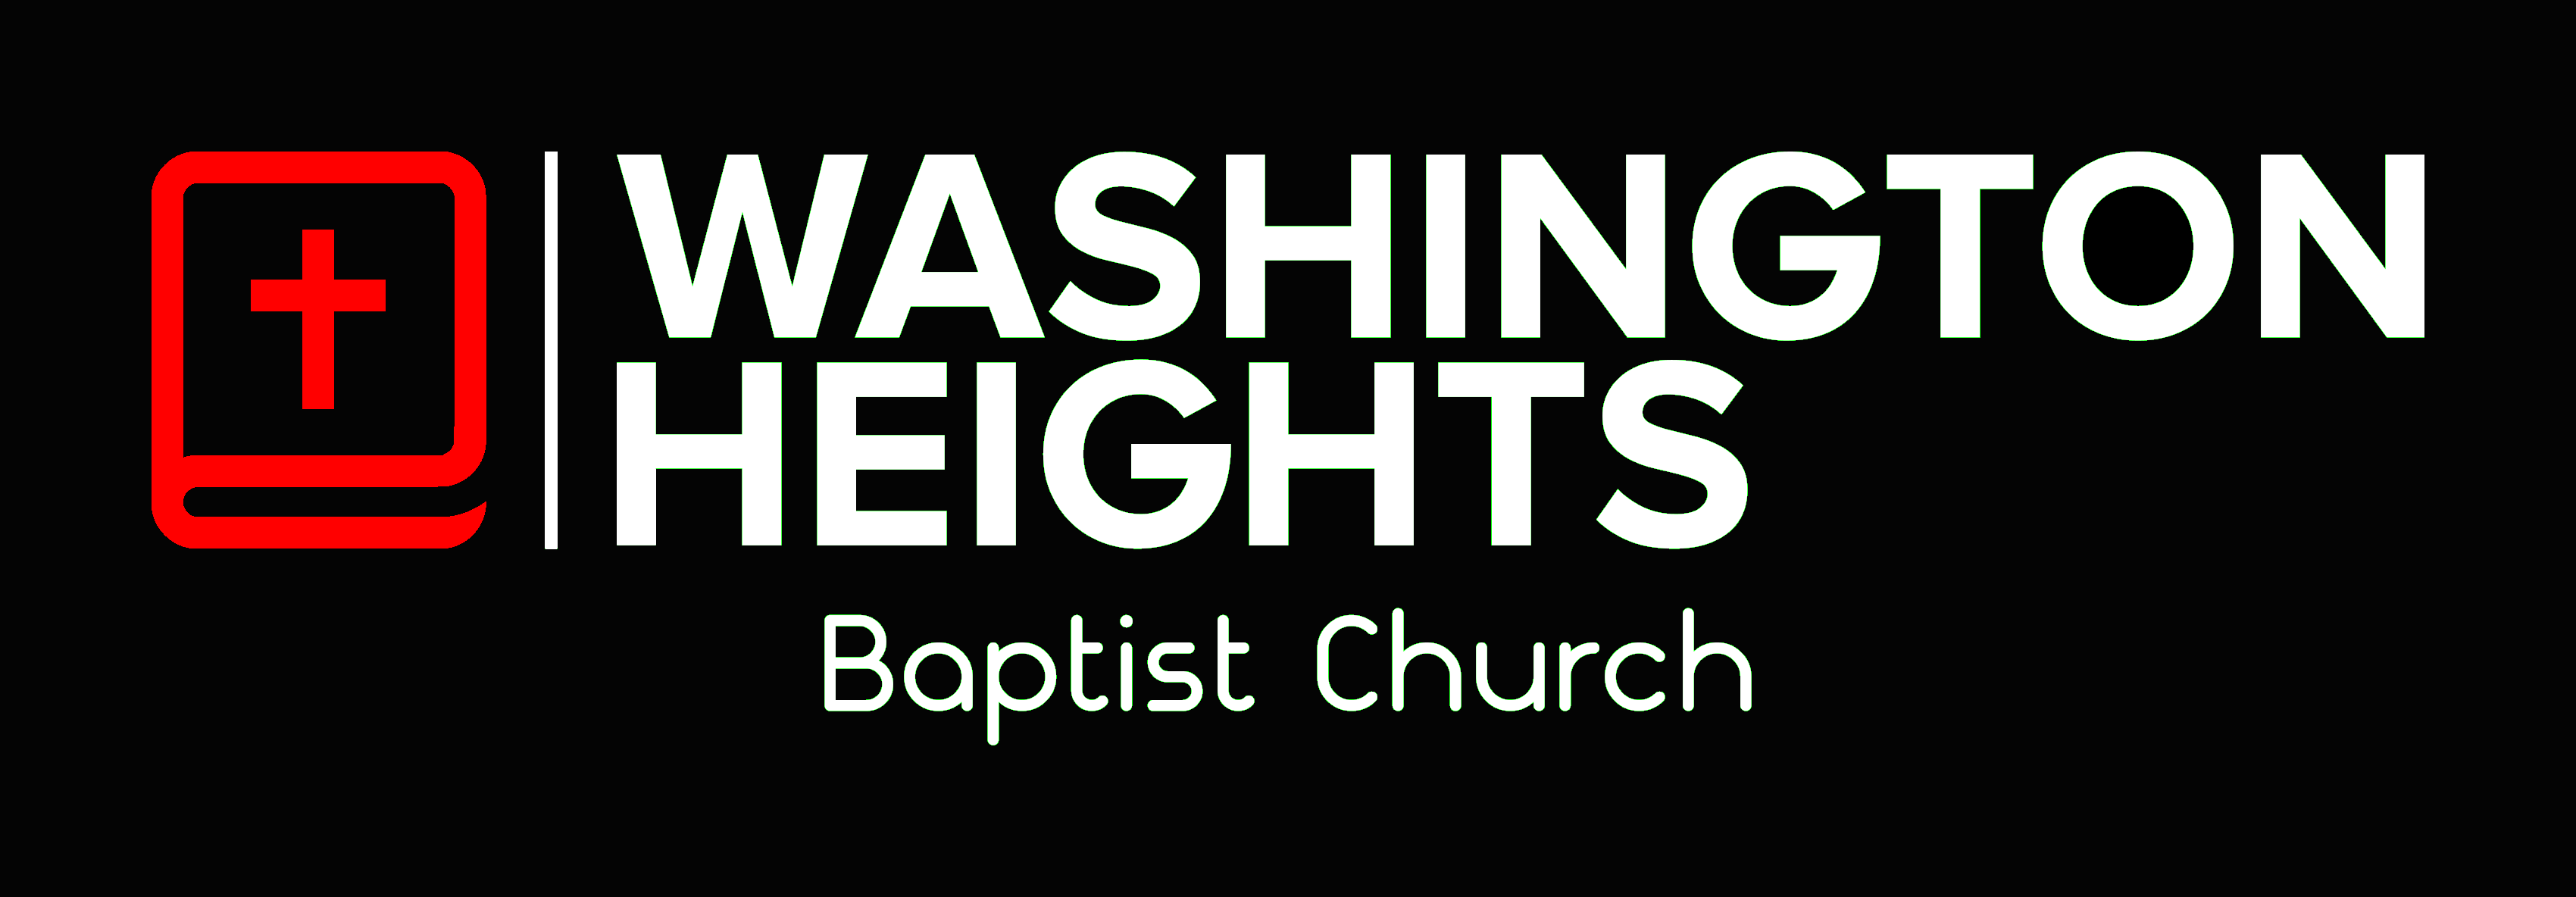 Washington Heights Baptist Church